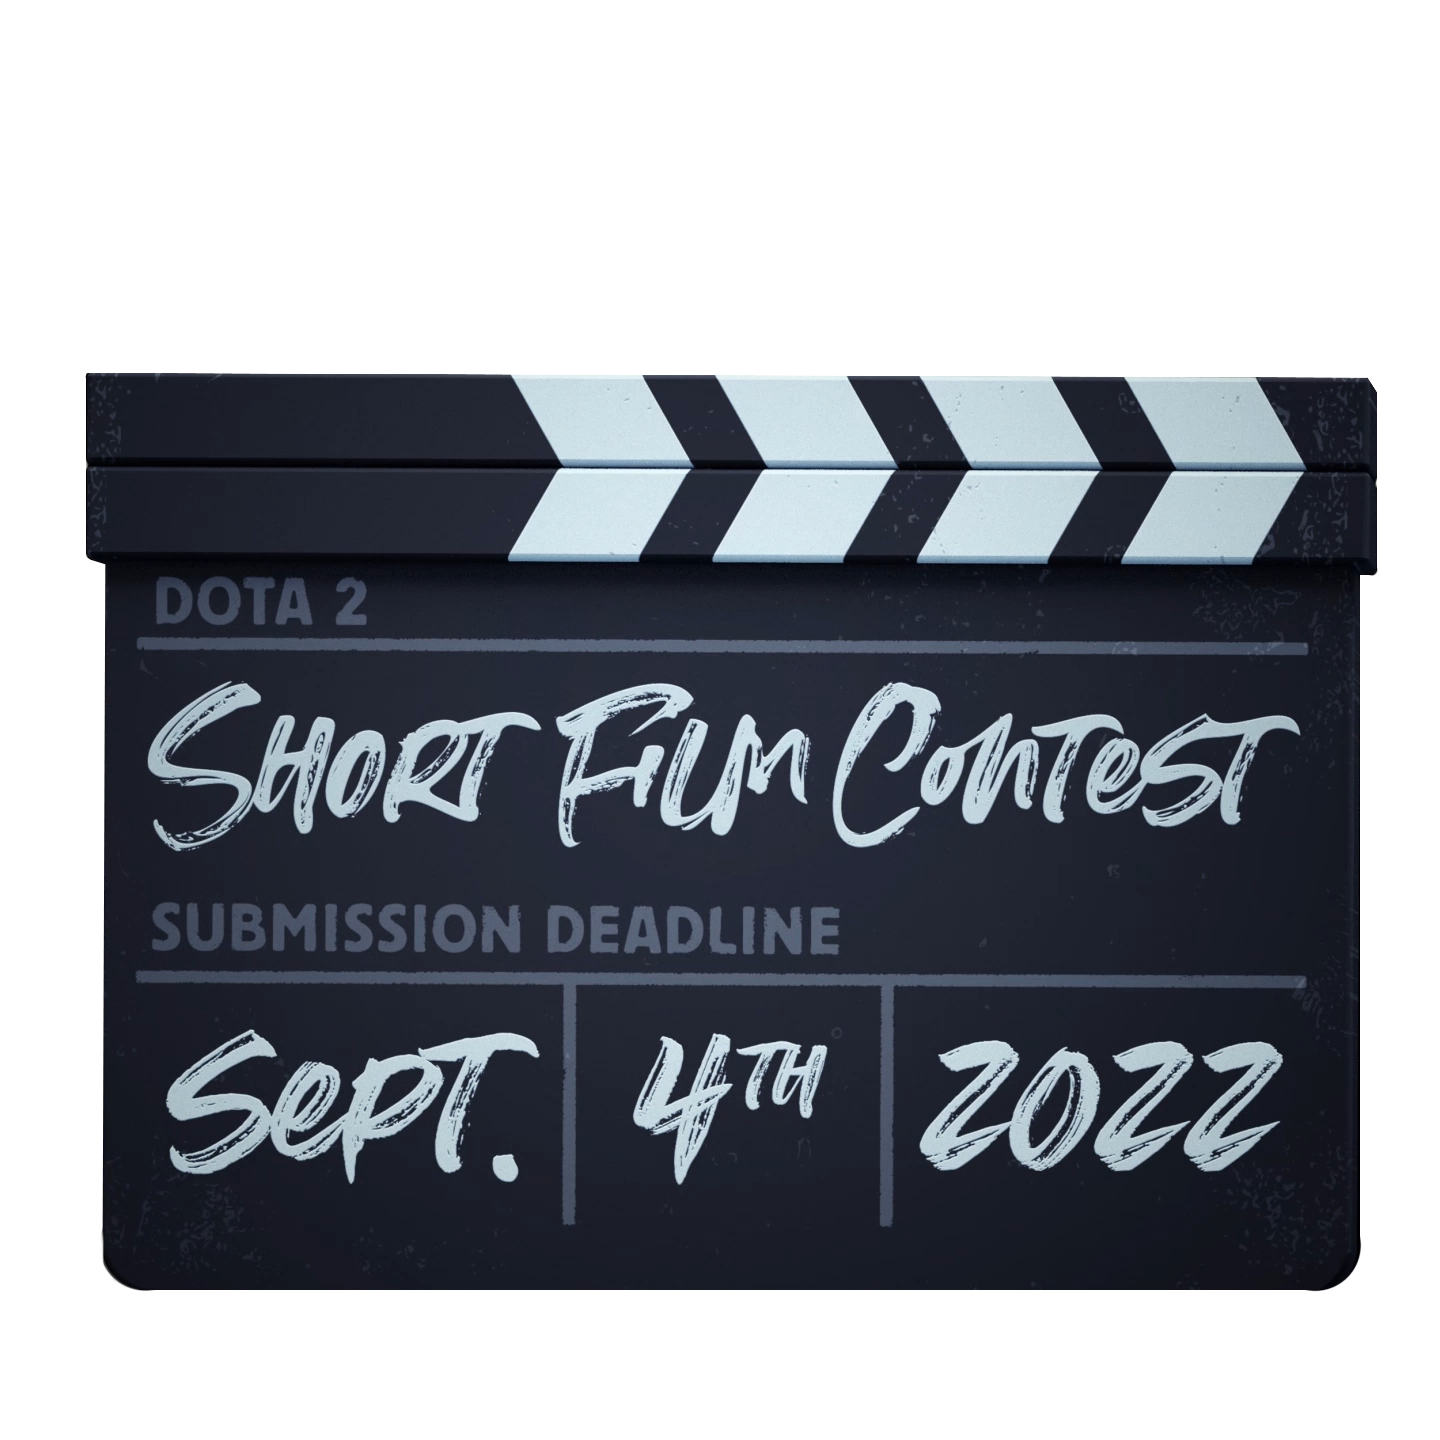 Contest film dota 2 short film contest фото 3